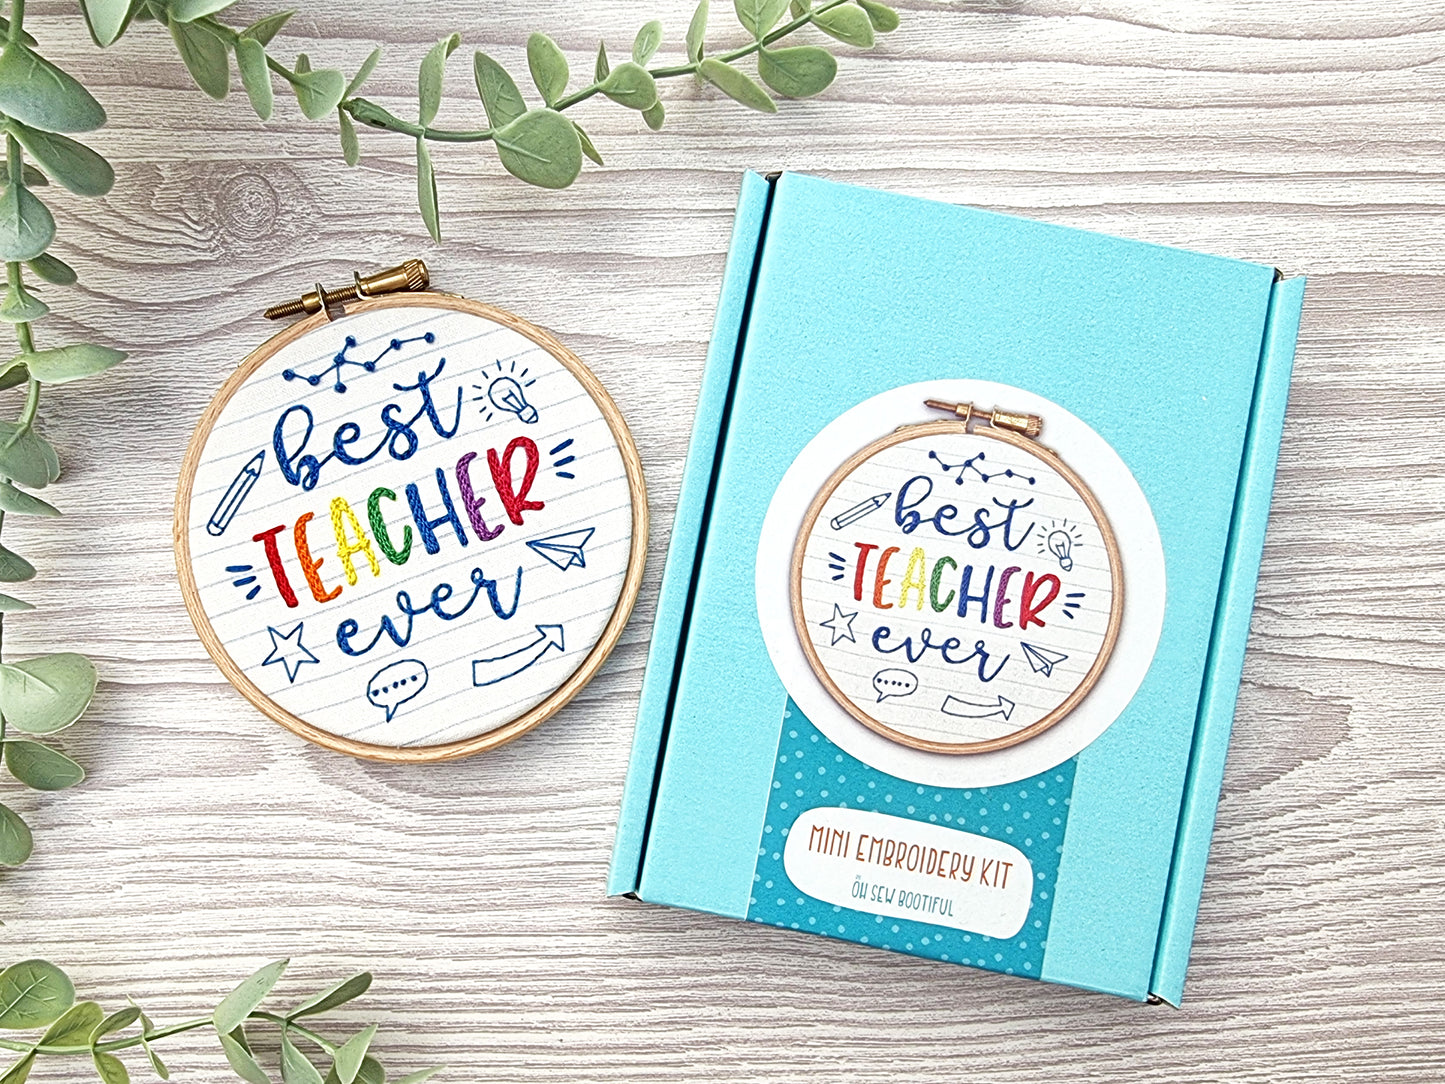 Mini Embroidery Kits UK, DIY Teacher Gifts UK, Thank you teacher gifts